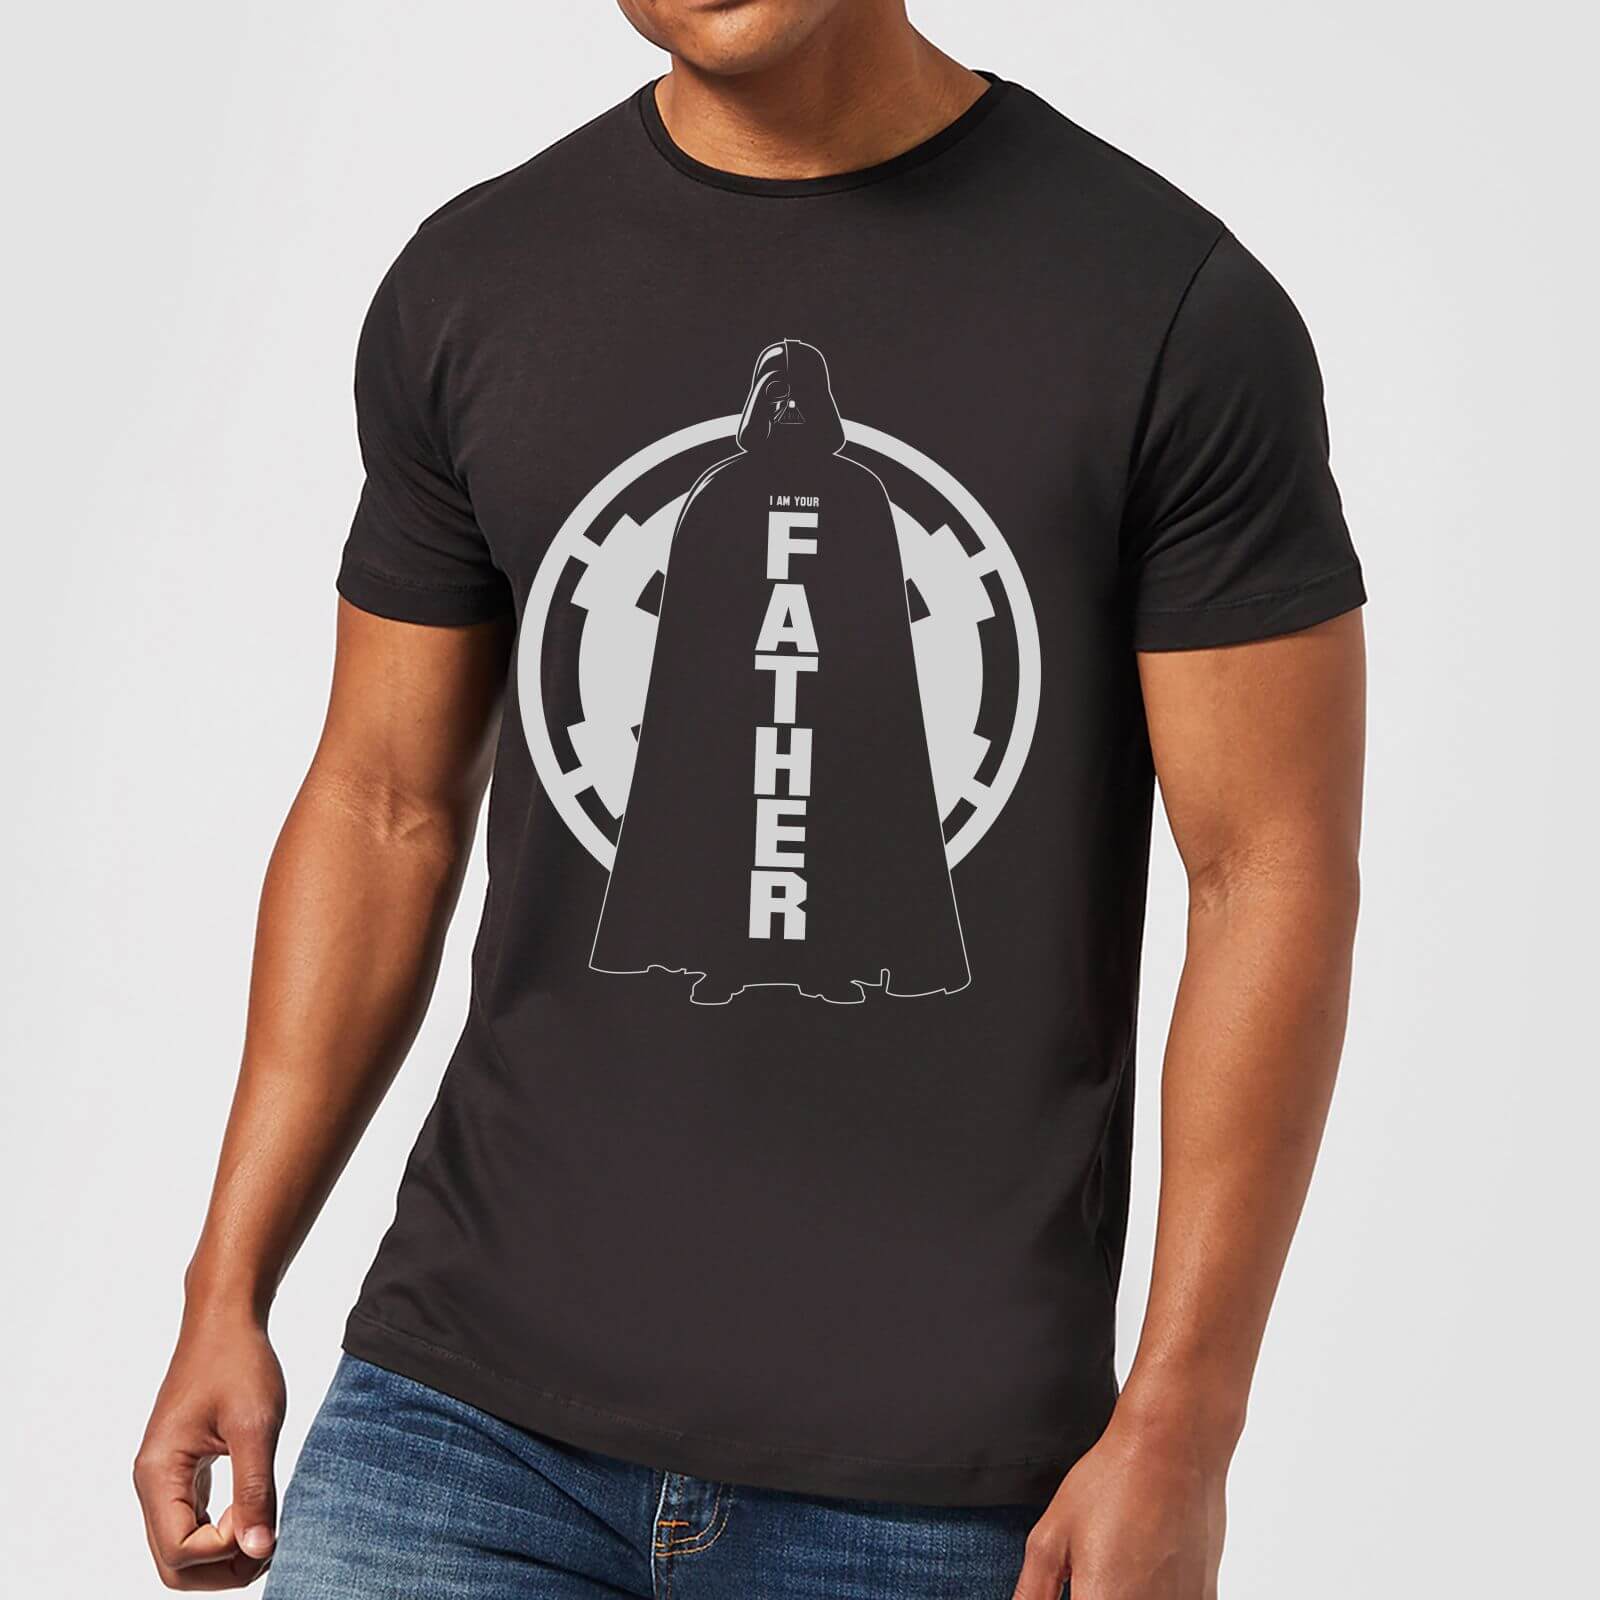 Star Wars Darth Vader Father Imperial Men's T-Shirt - Black - M